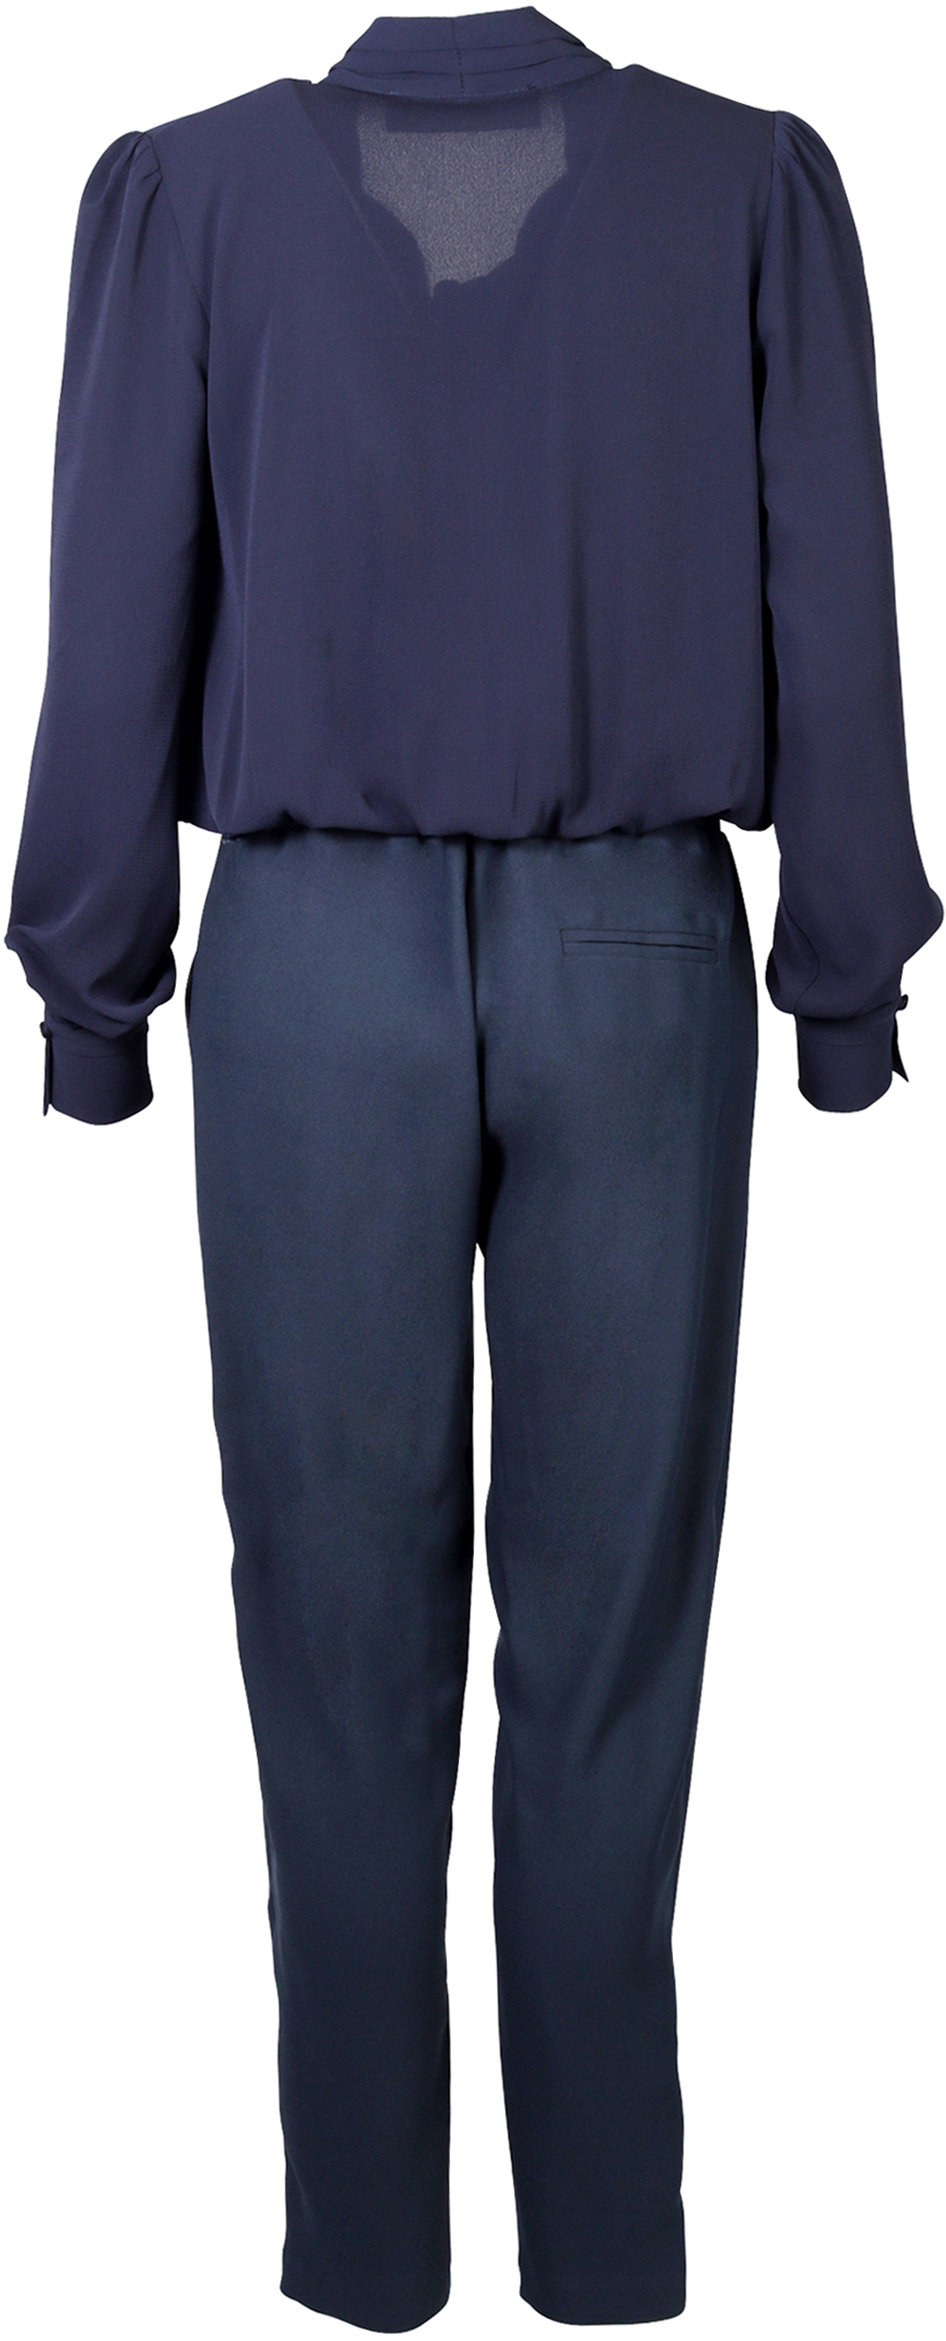 shirtaporter jumpsuit navy 42